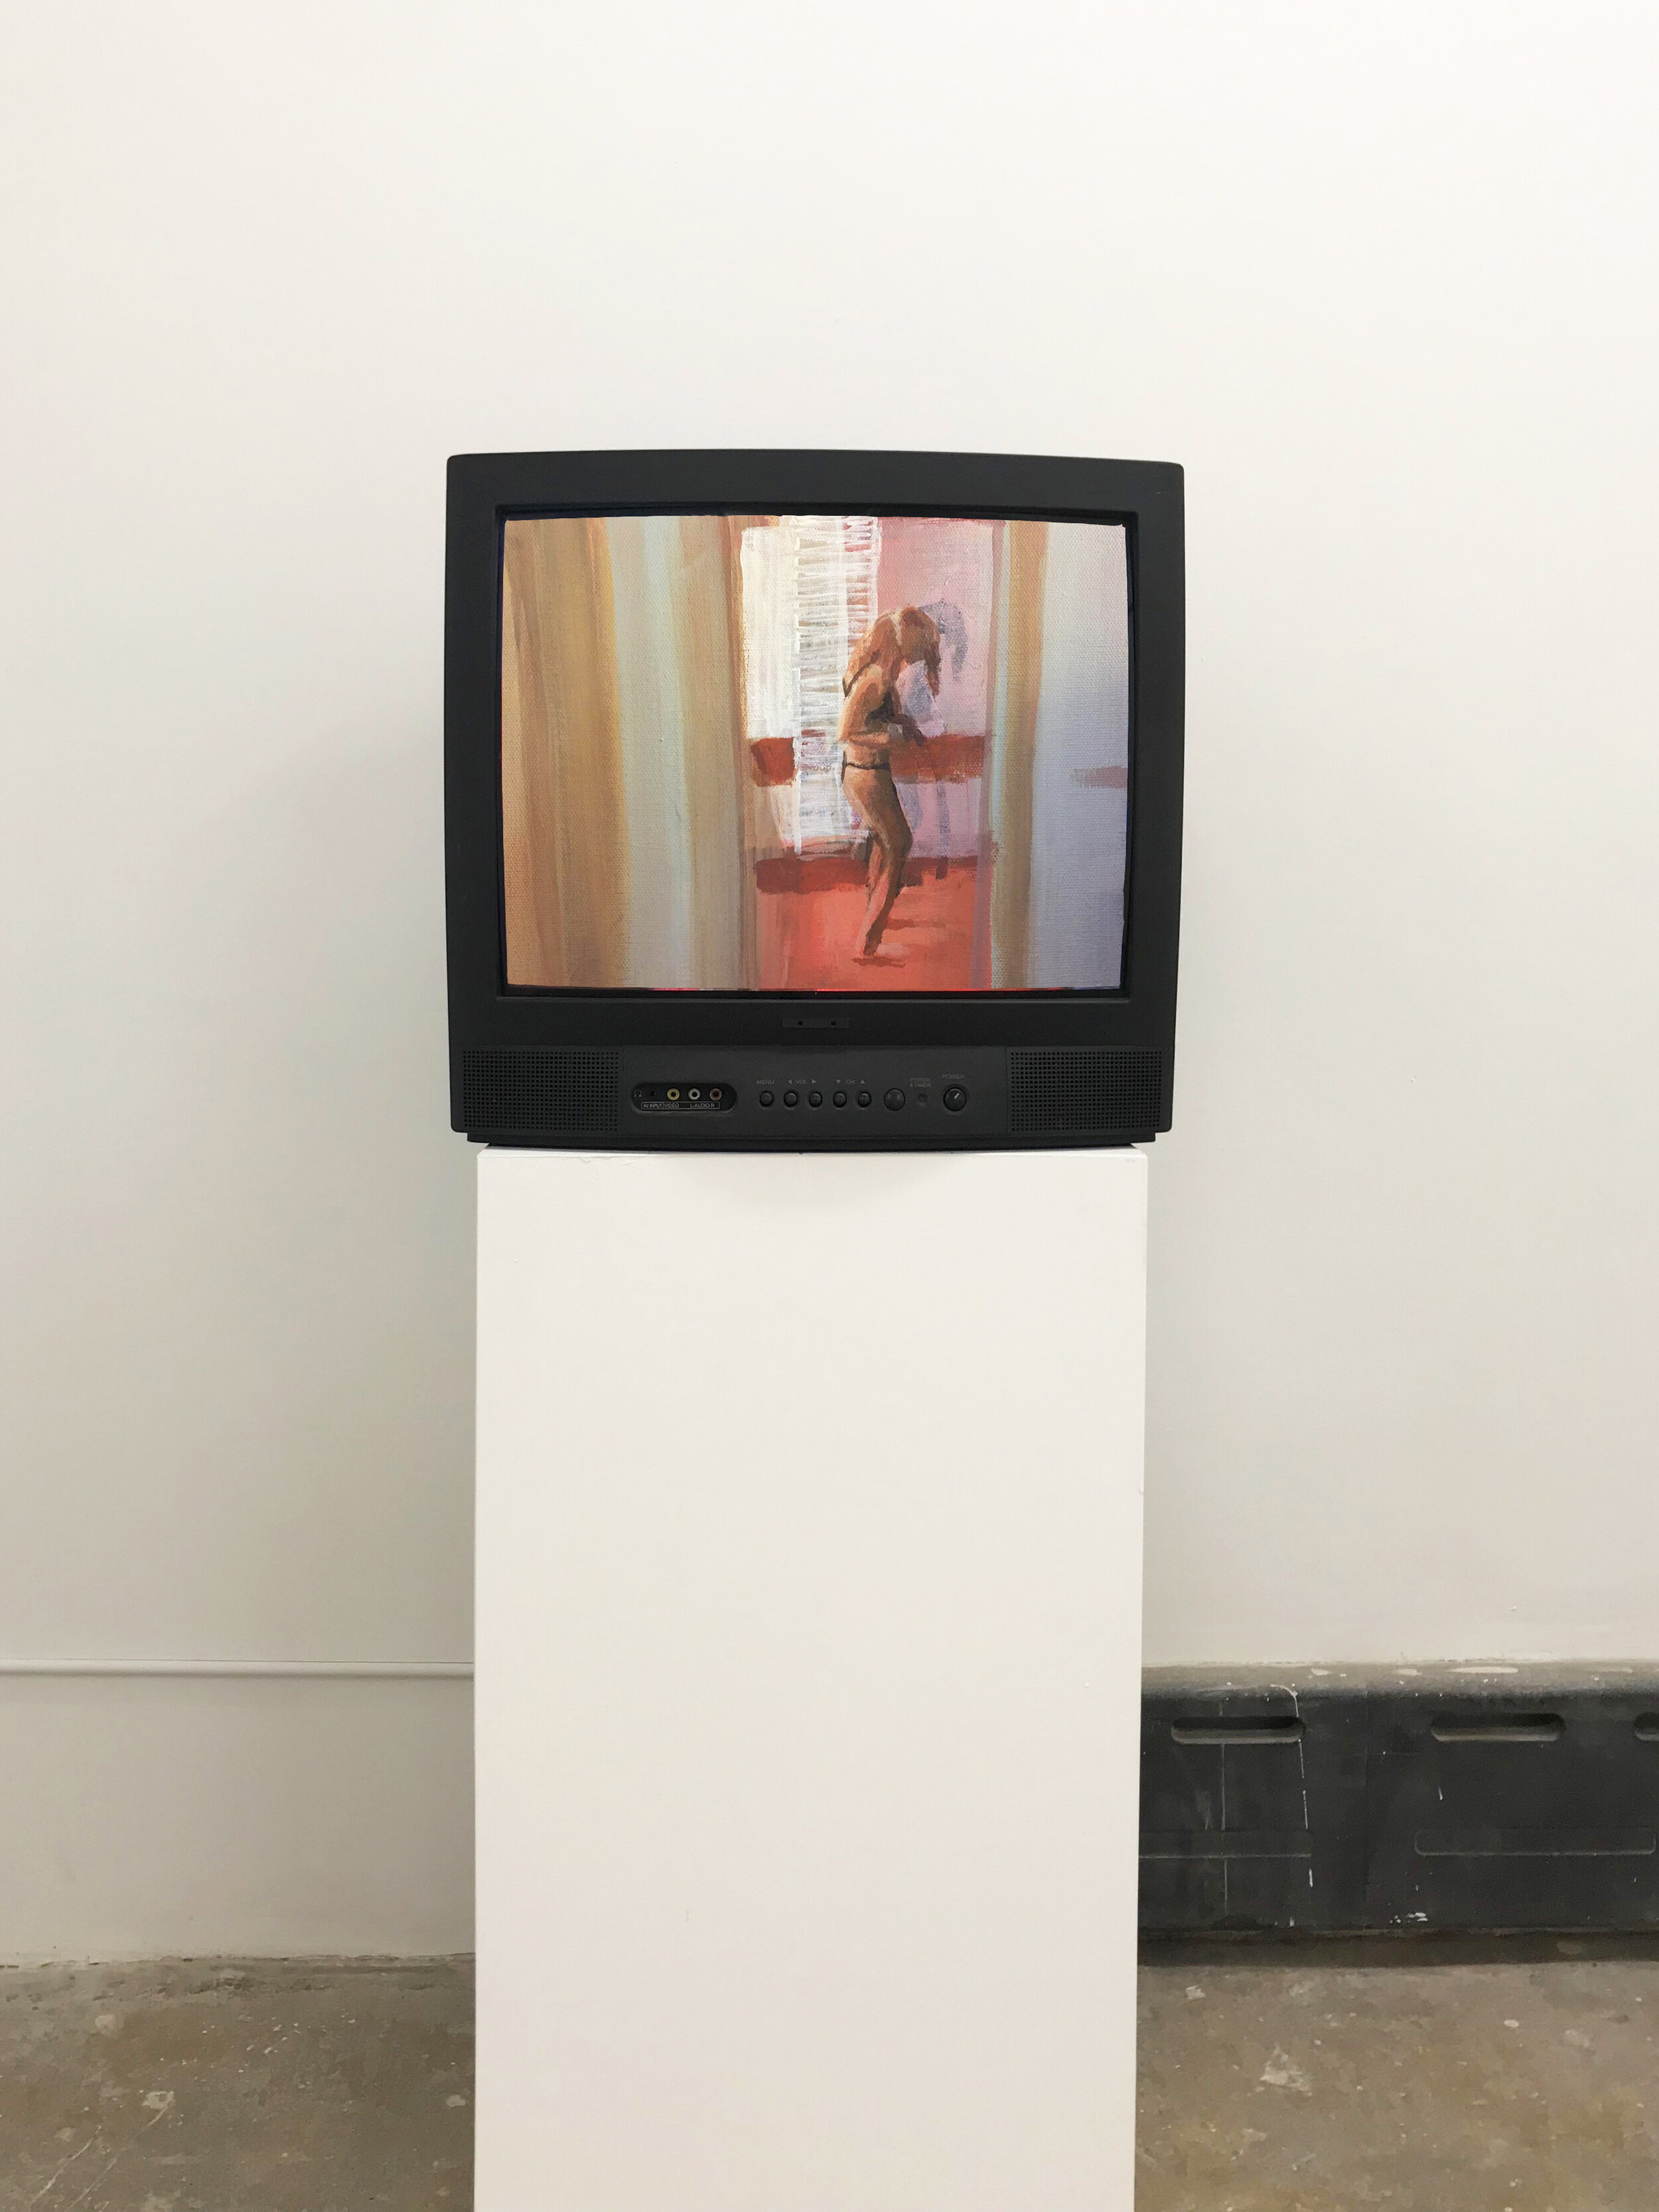 Trittbrettfahrer exhibition at Cindy Rucker Gallery, featuring works by Claudia Bitran, Howard Schwartzberg, Rusty Shackleford, installation image of Claudia Bitran piece